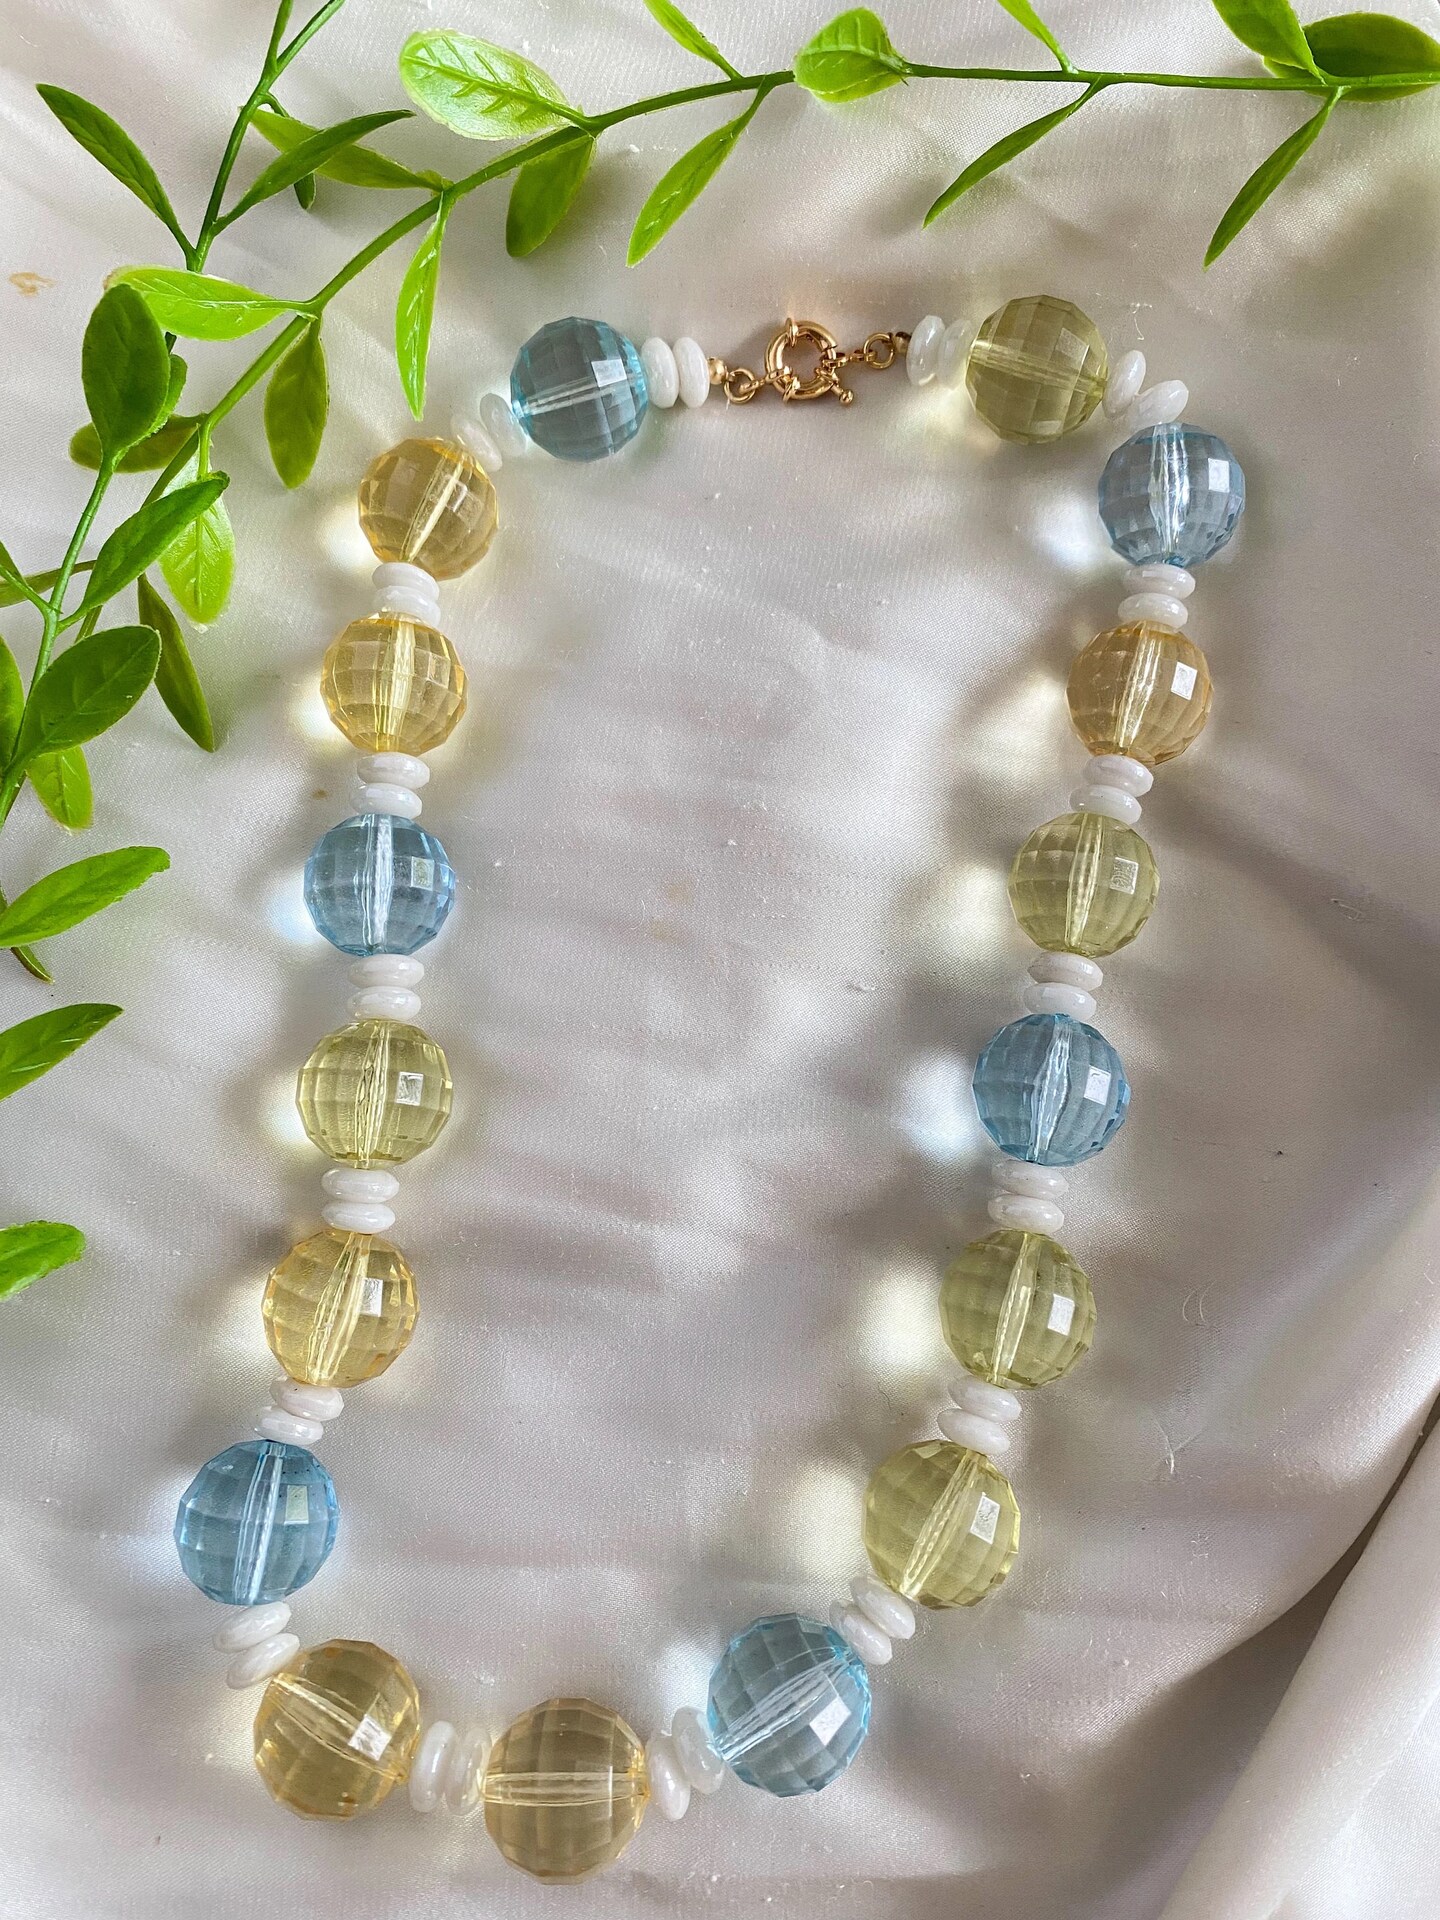 Buy Vintage Long Necklace Turquoise Wood Beads Elephant Pendant Necklaces  for Women Fashion Jewelry (Elephant Pendant) at Amazon.in